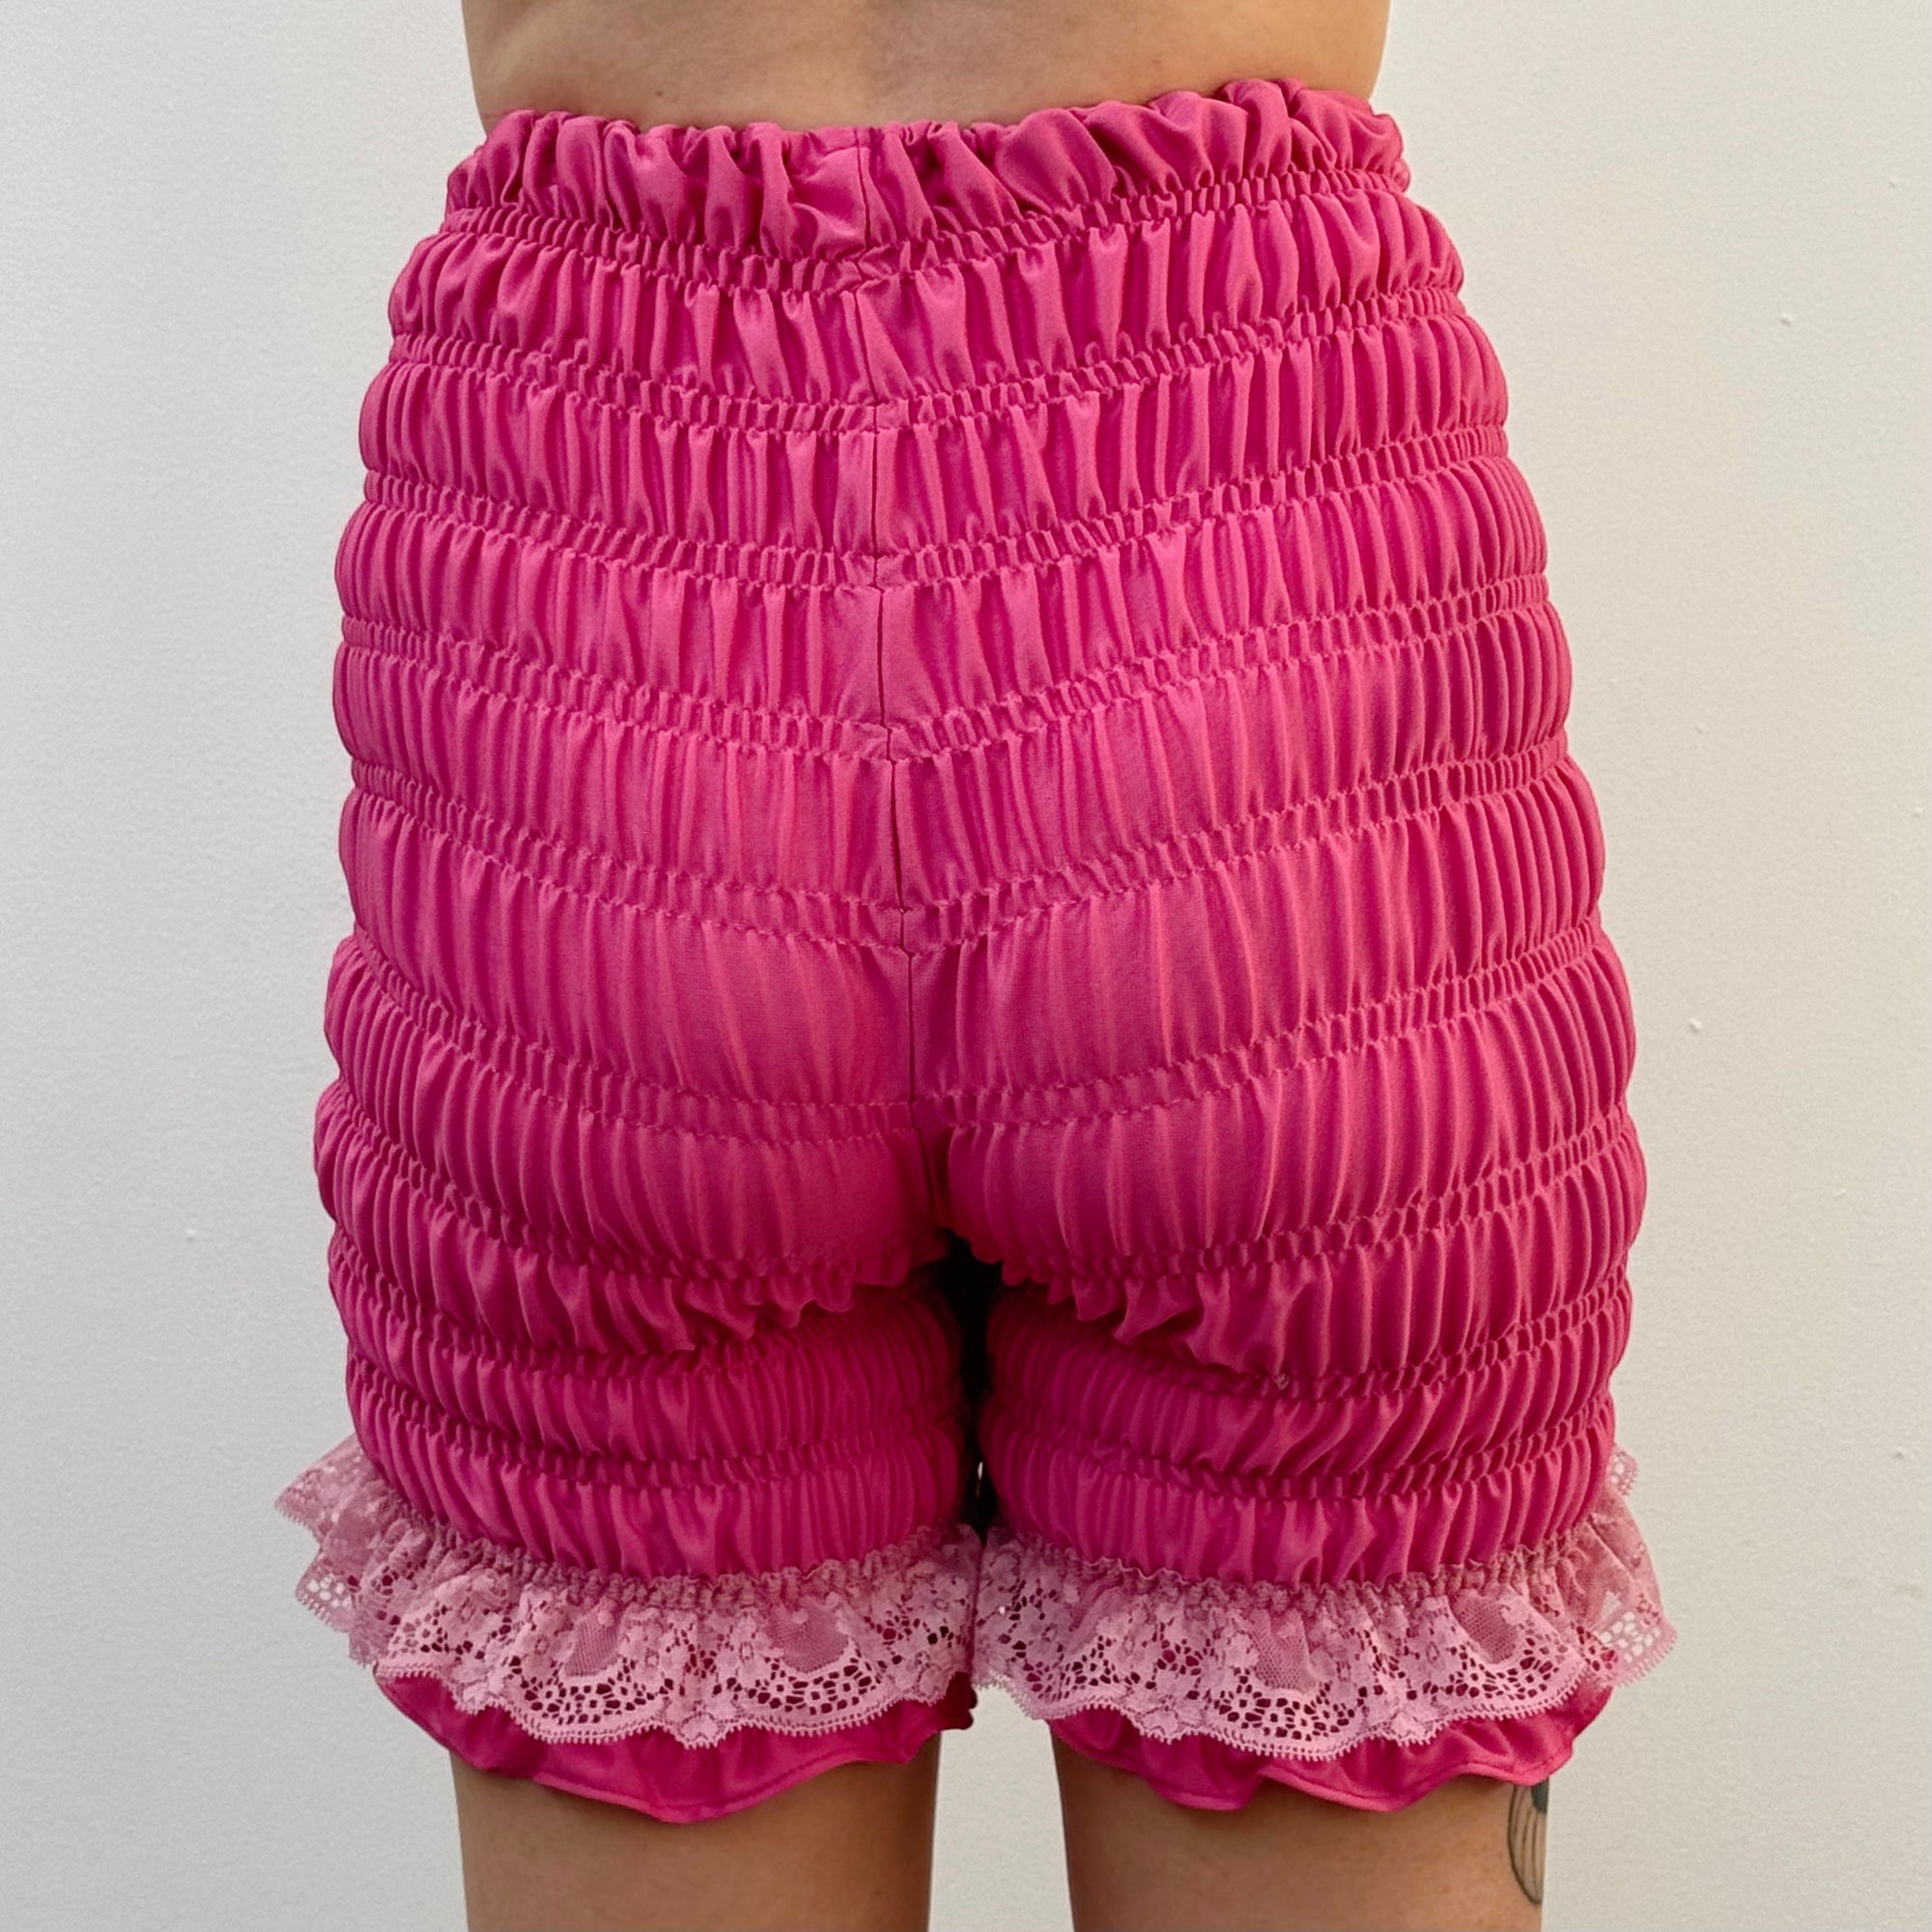 ORDER MY SIZE - rasberries - Naughty Bloomer Shorts